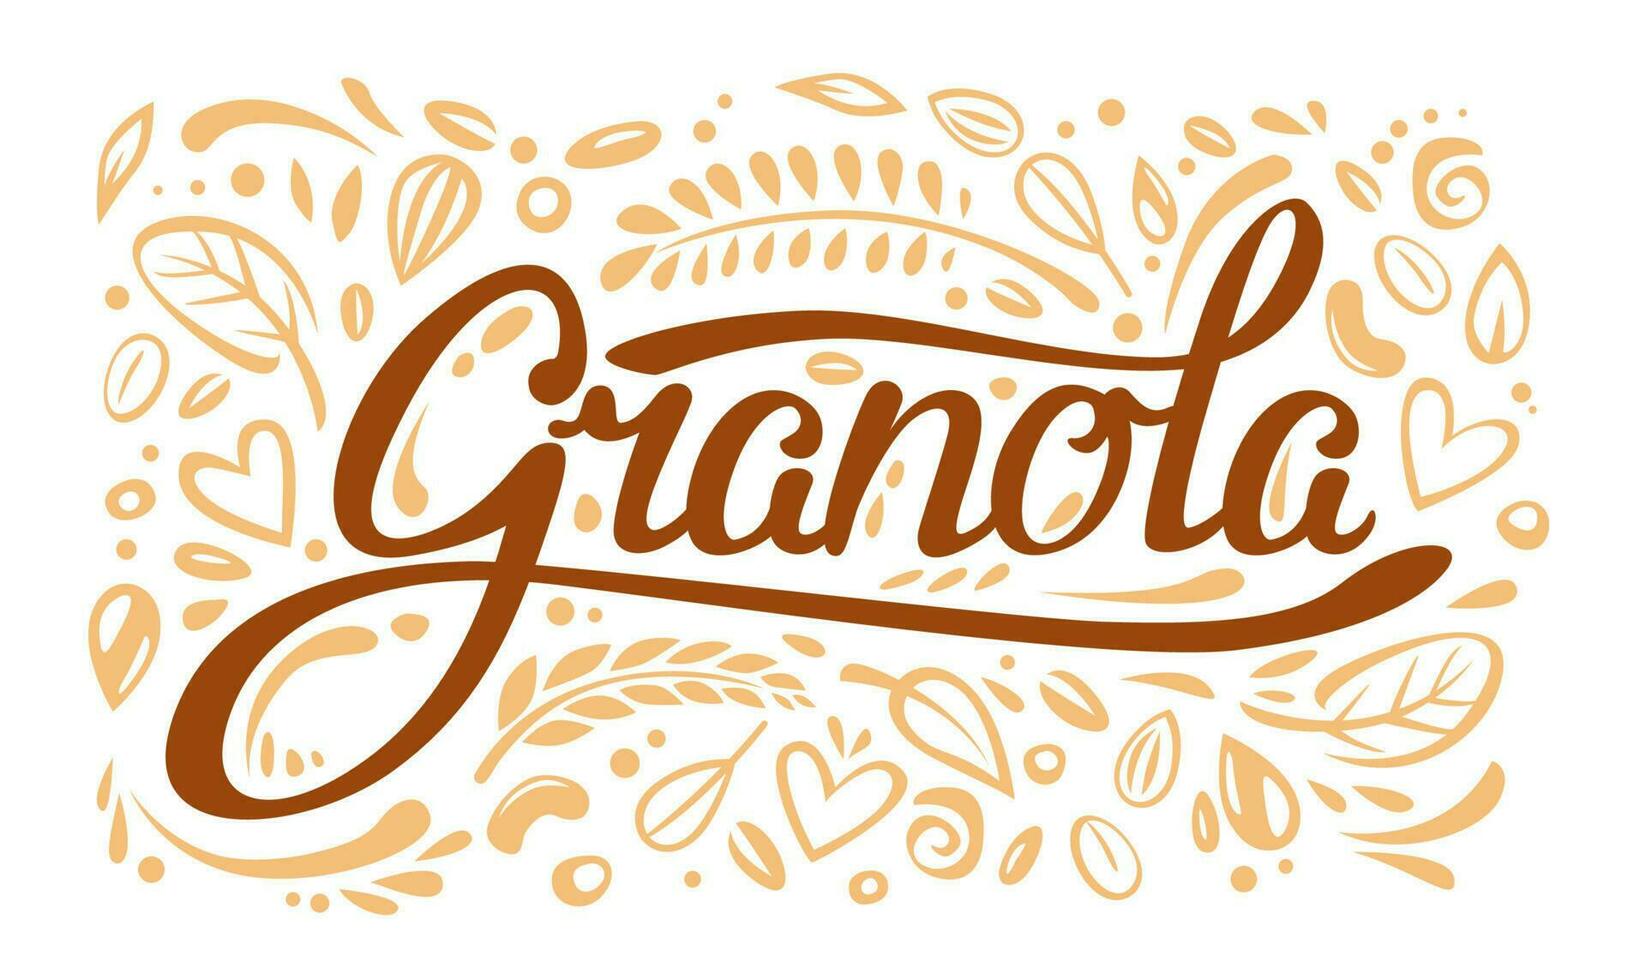 Granola cereal food label or outline background vector